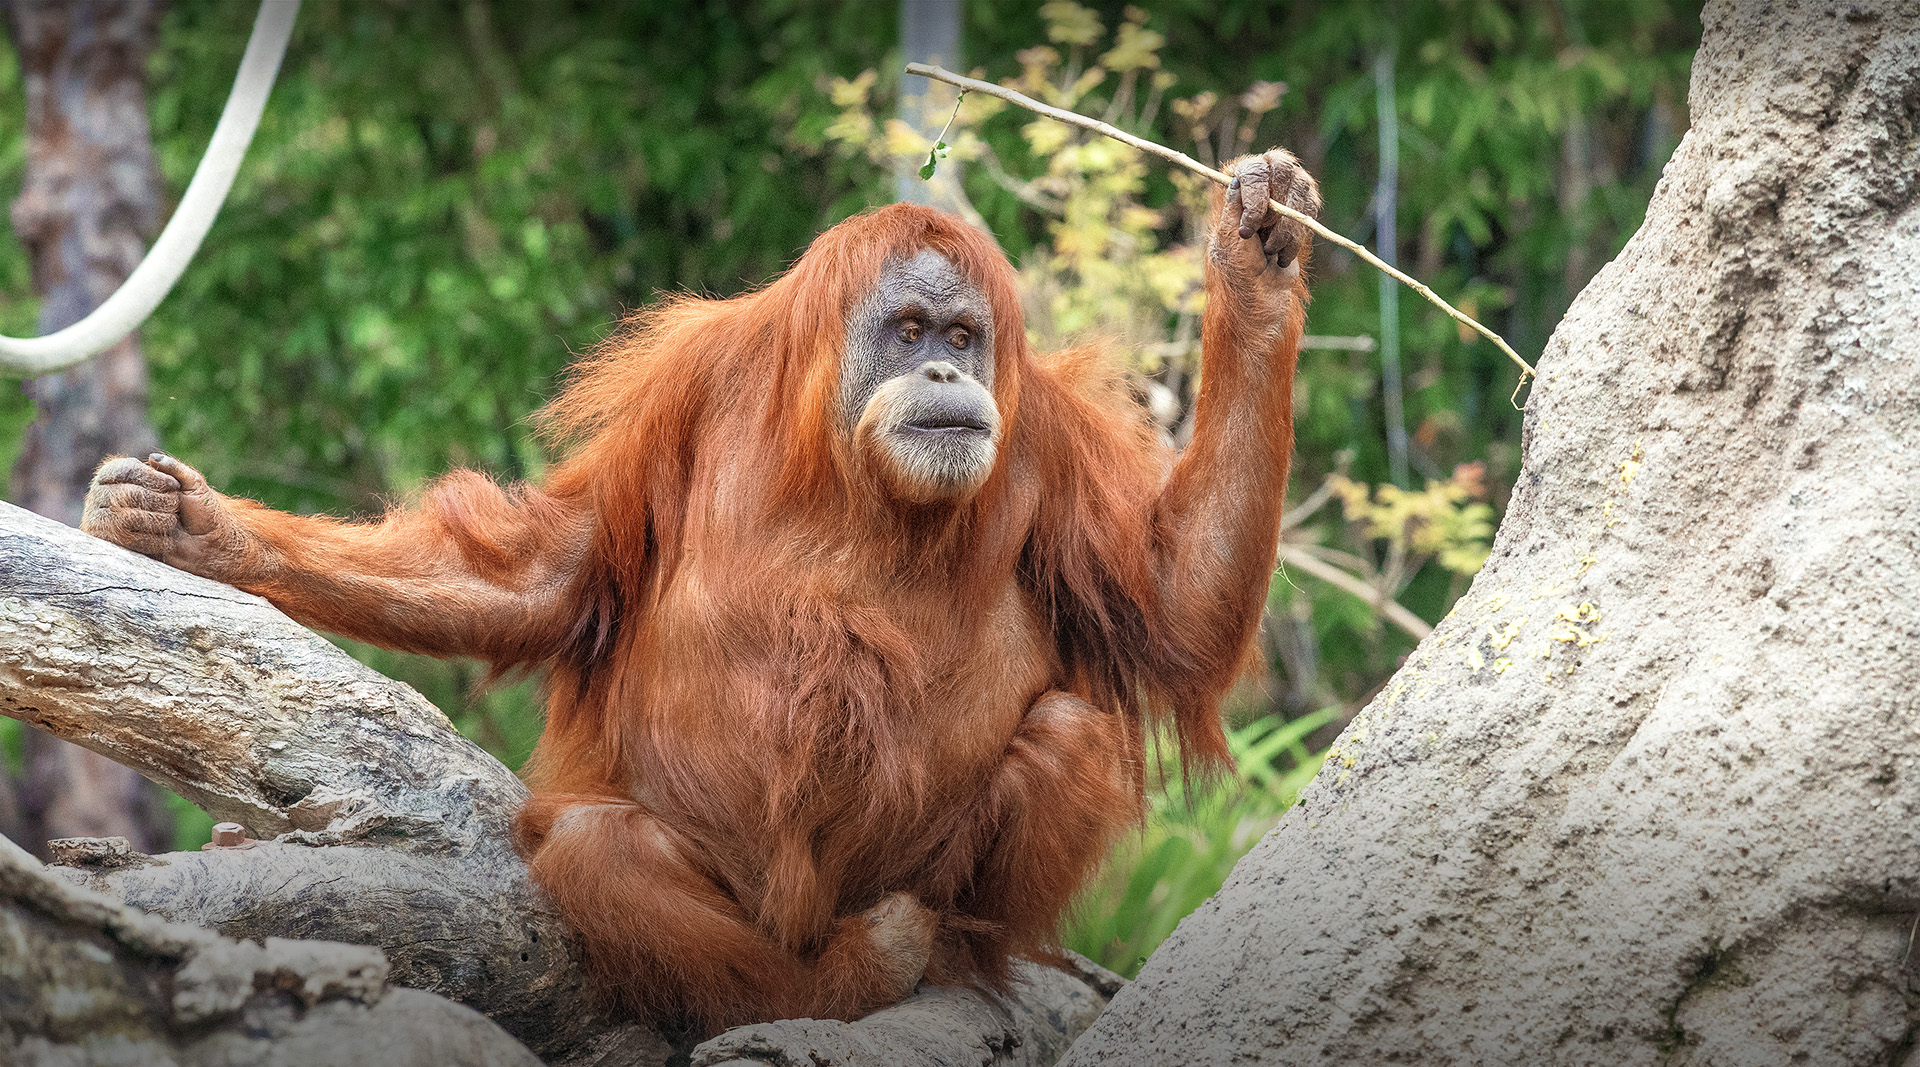 Orangutan holding a stick